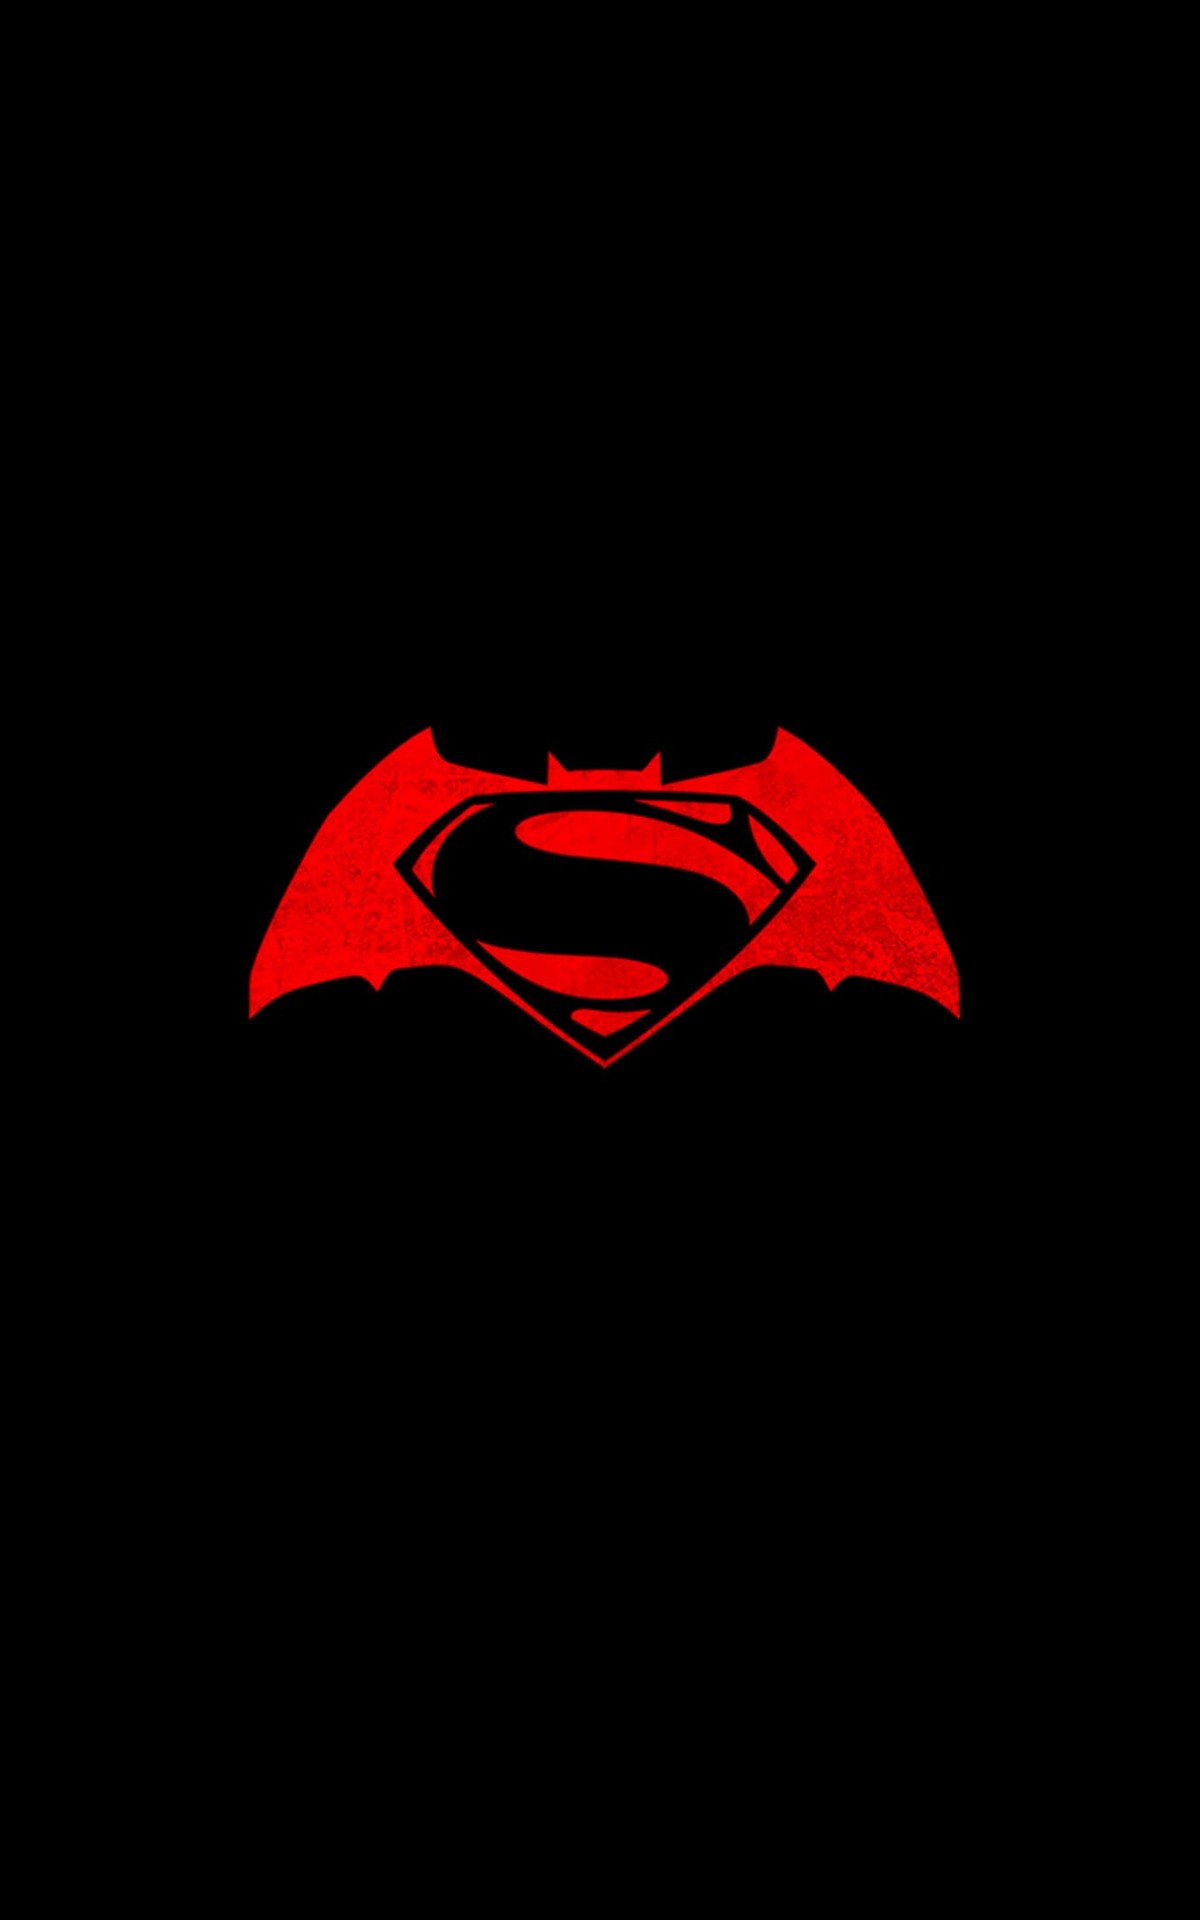 Batman v Superman logo Wallpaper for Amazon Kindle Fire HDX